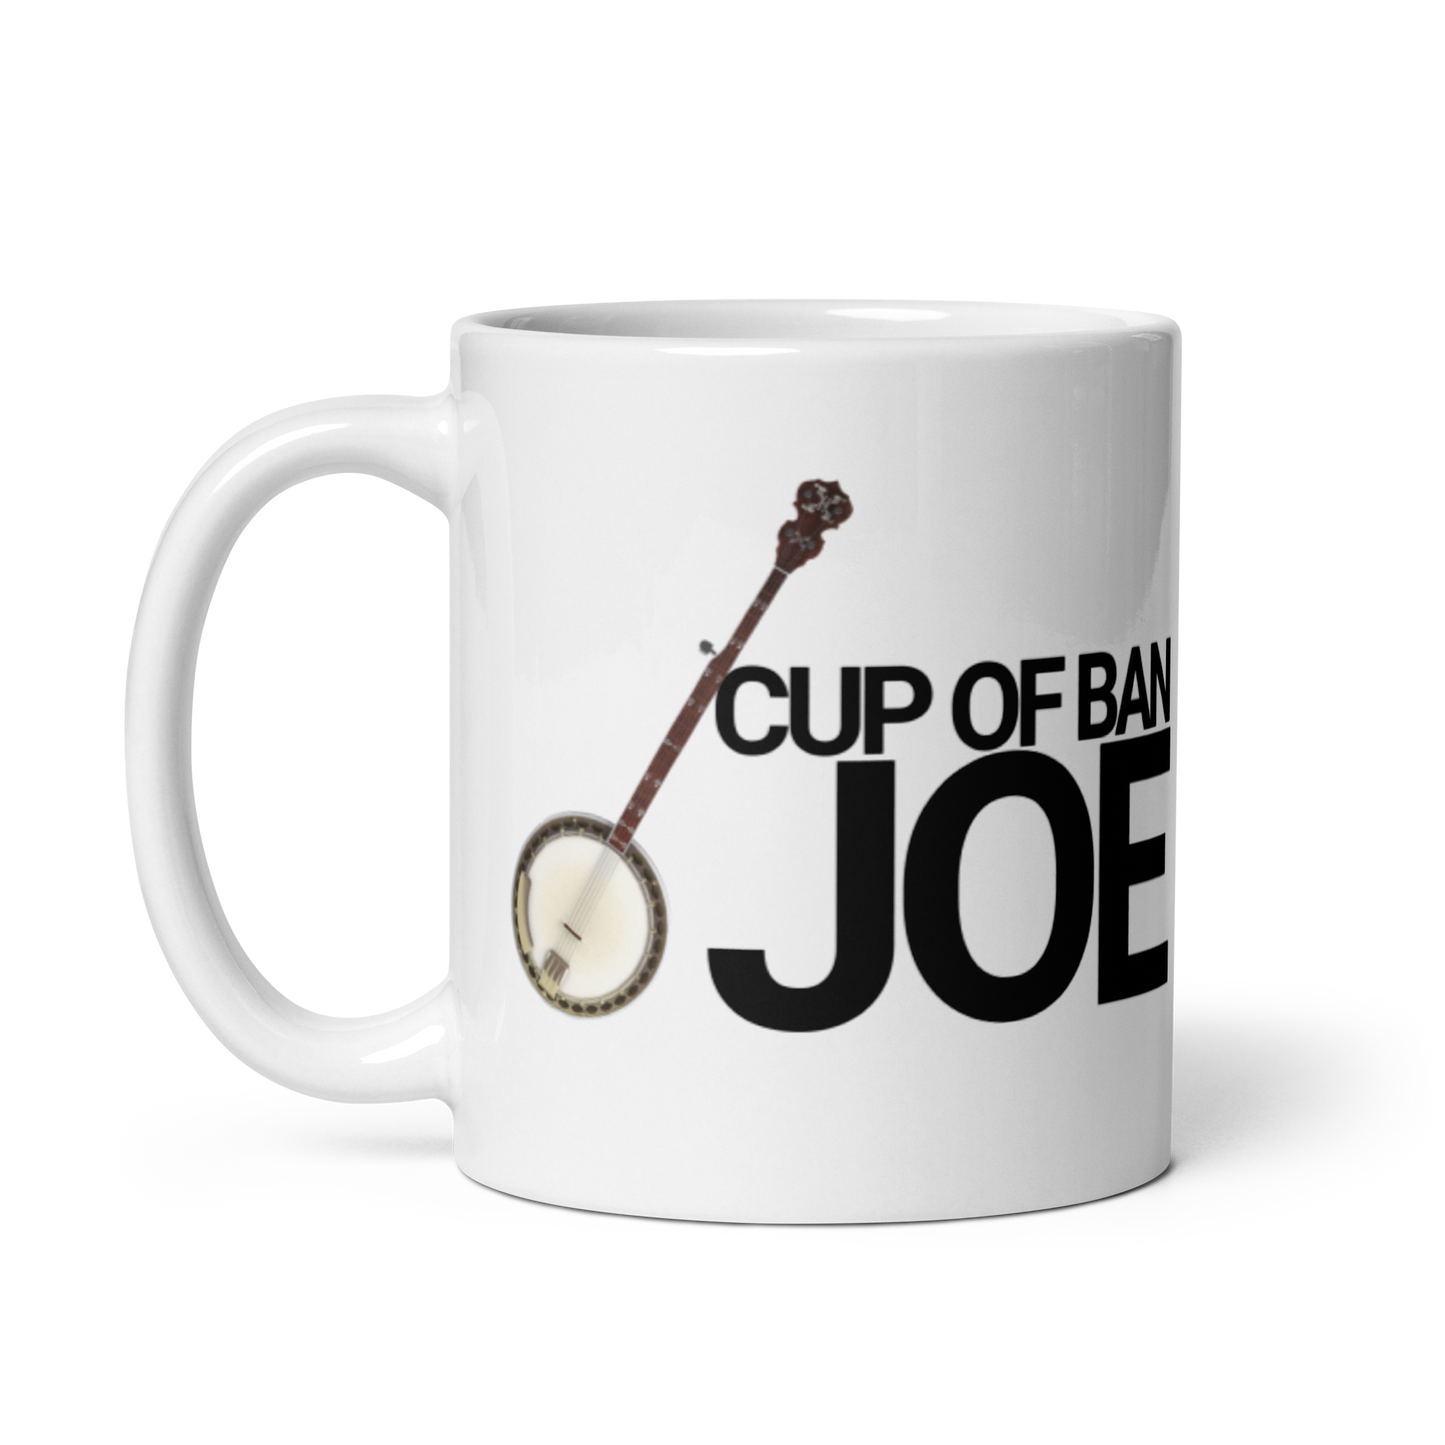 Cup of BanJOE - Mug